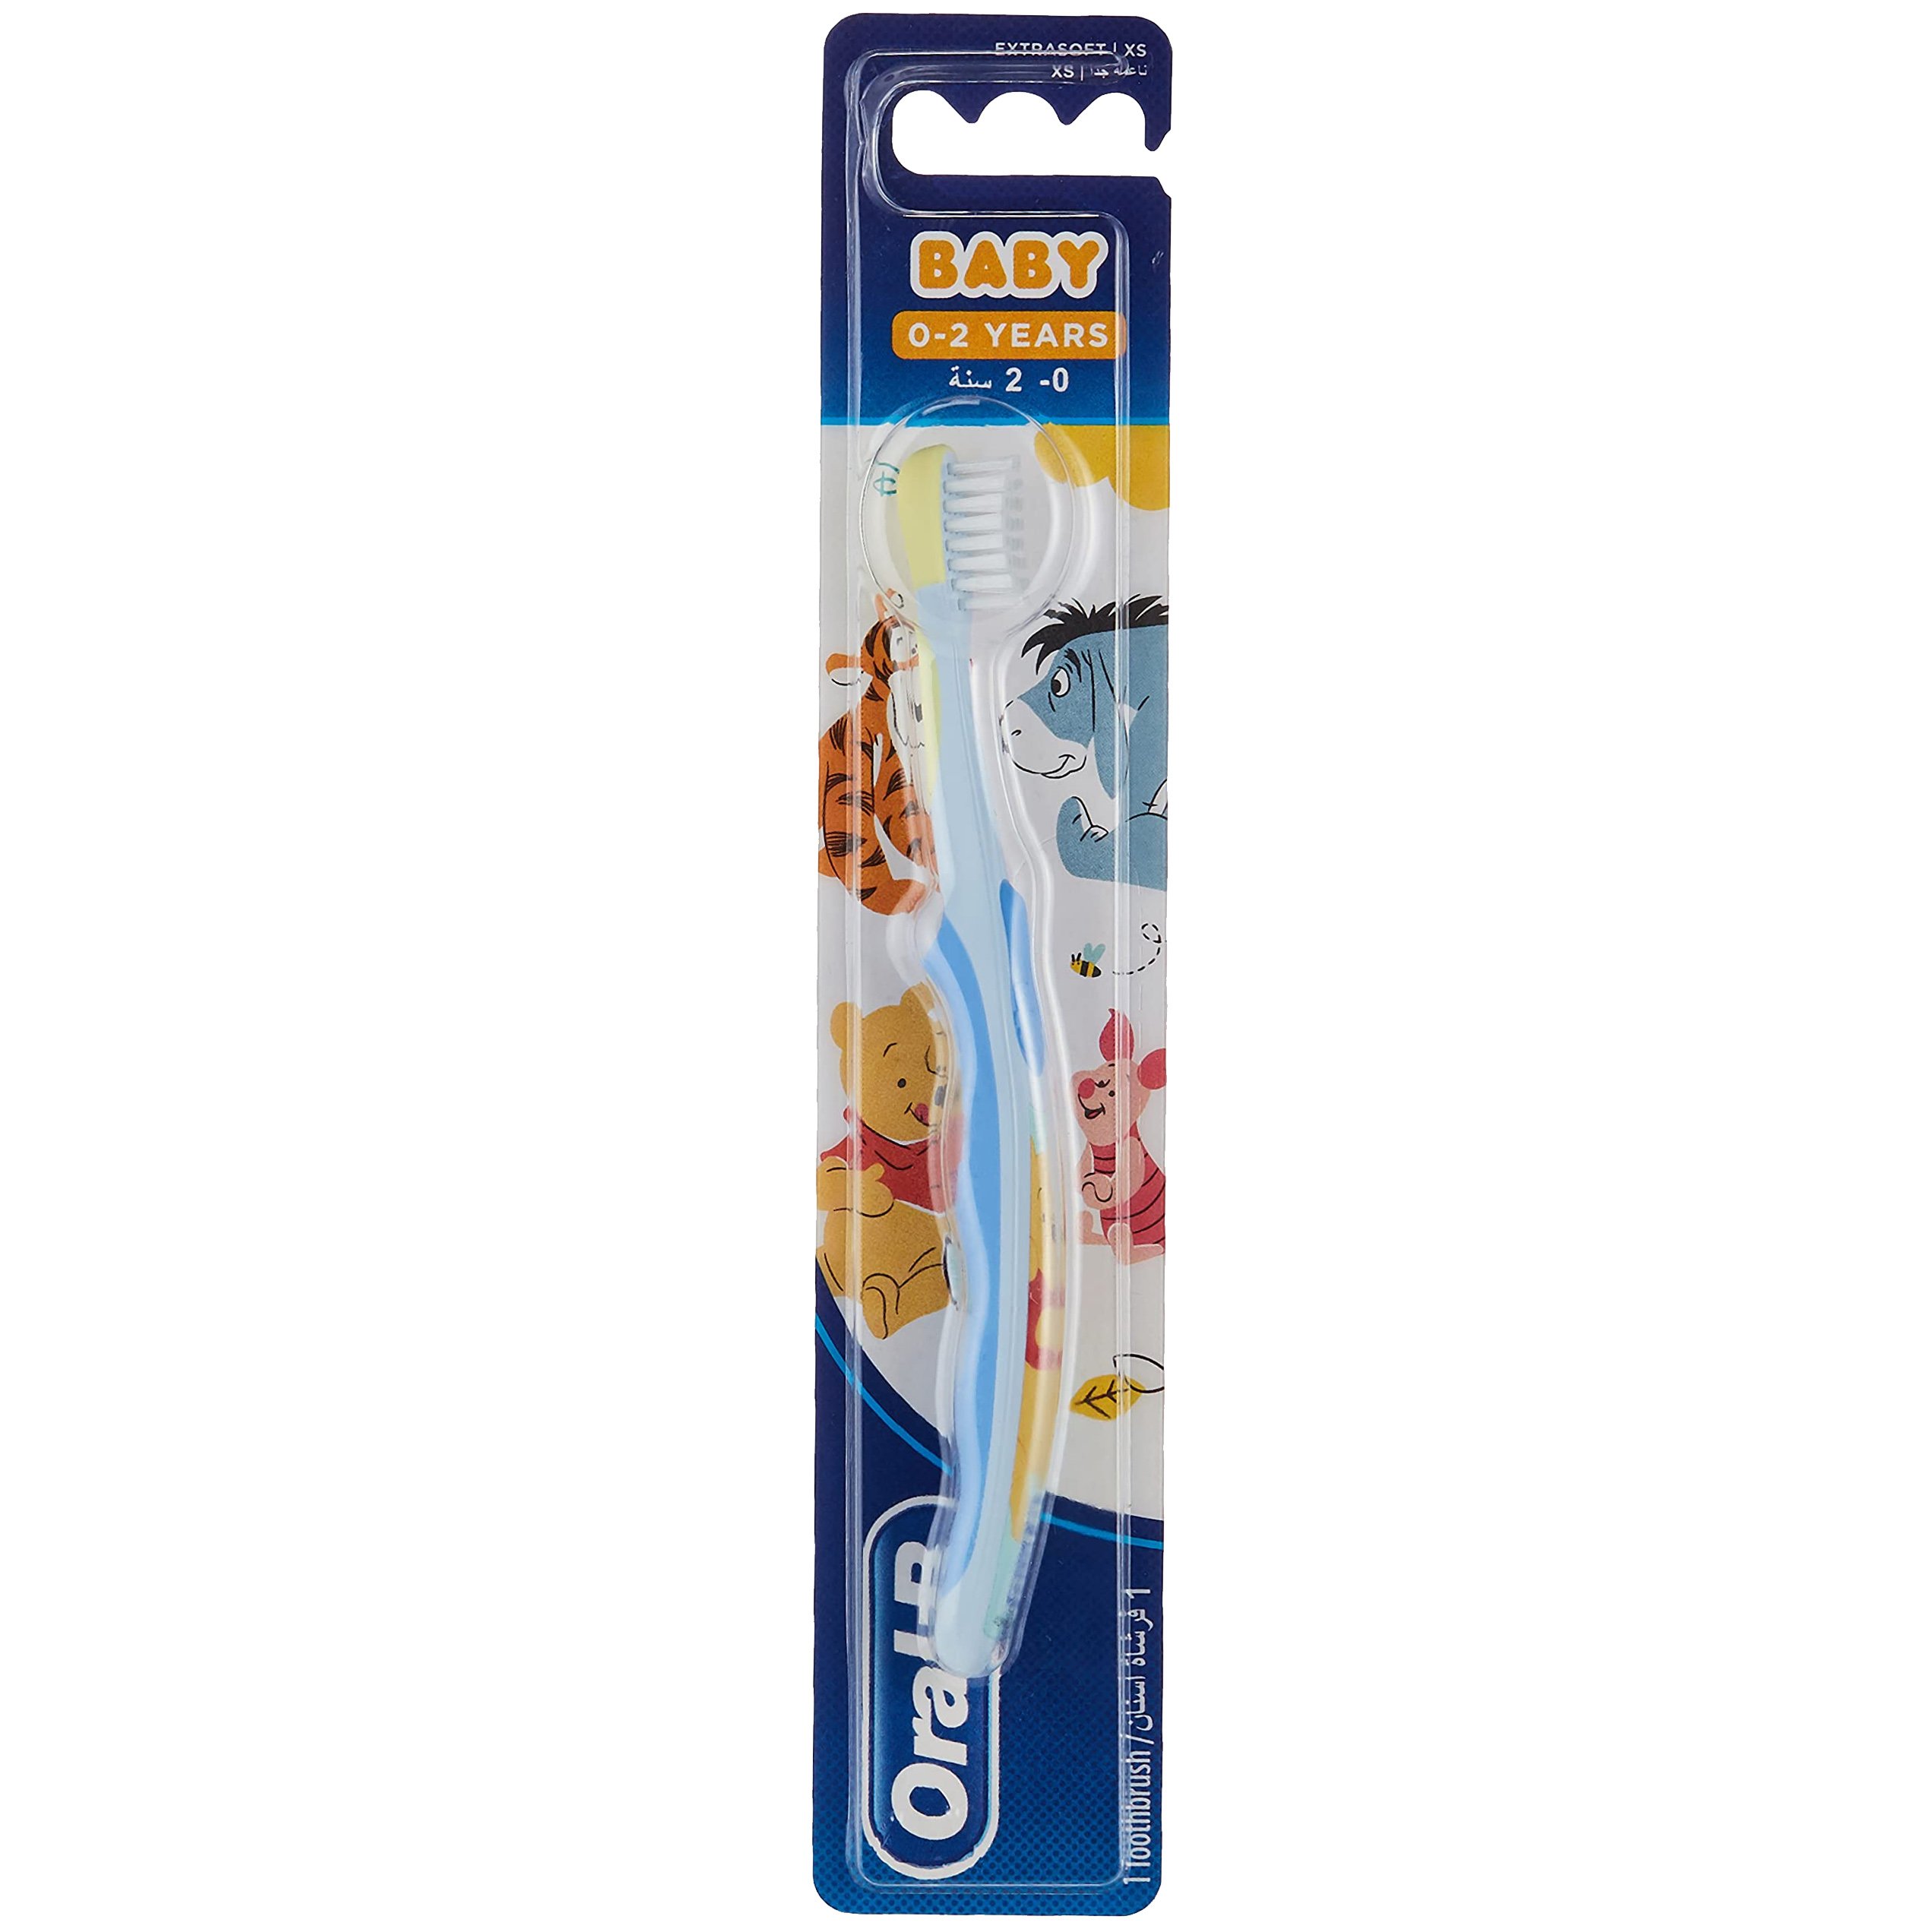 Oral-B Baby Toothbrush 0-2 Years Extra Soft Πολύ Μαλακή Οδοντόβουρτσα Με Τον Winnie το Αρκουδάκι από 0-2 Ετών 1 Τεμάχιο